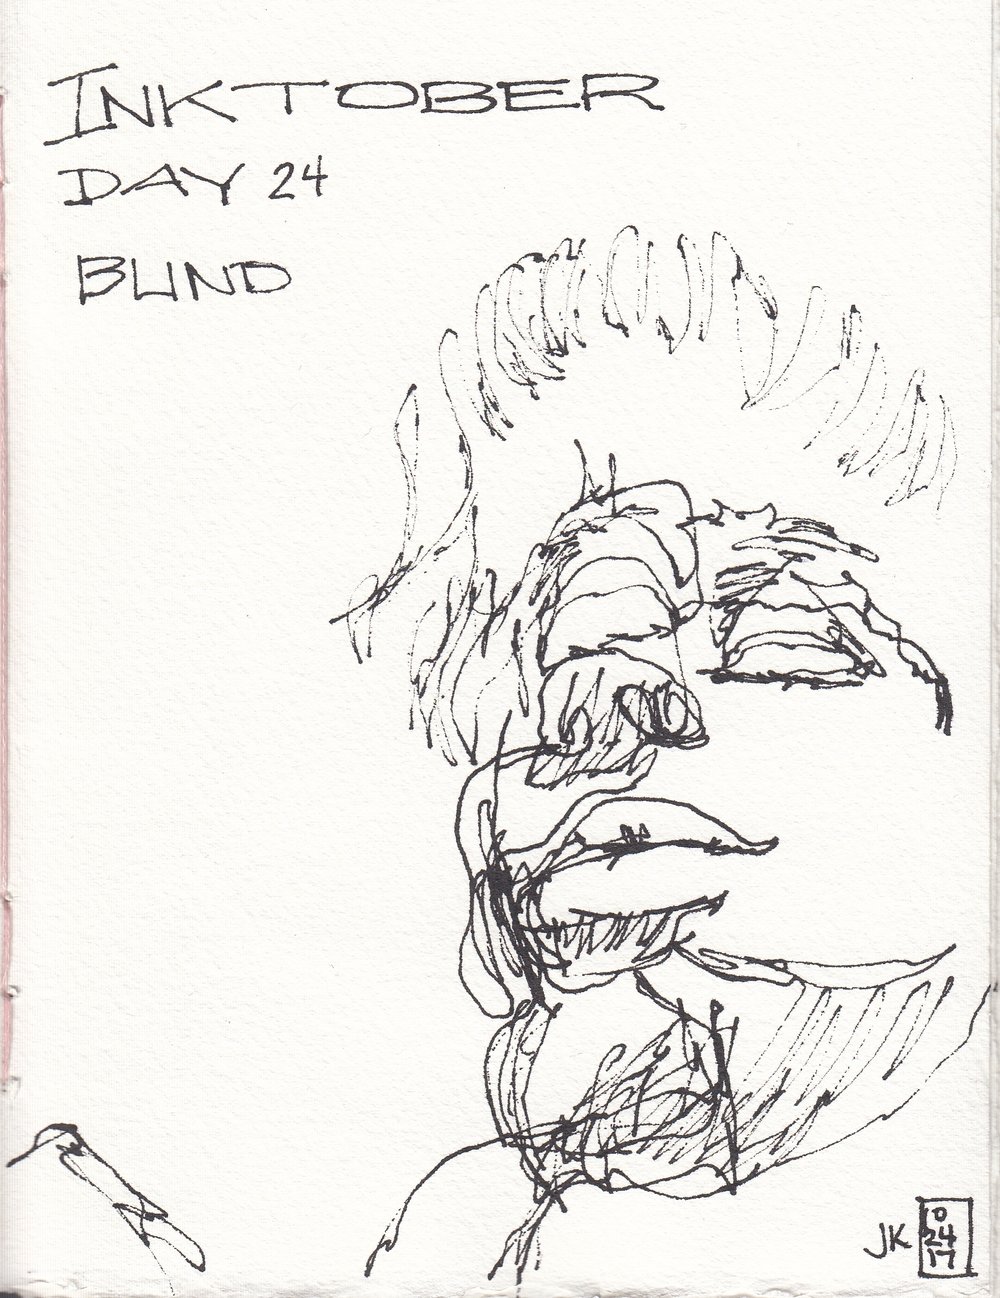 Day 24 - BLIND